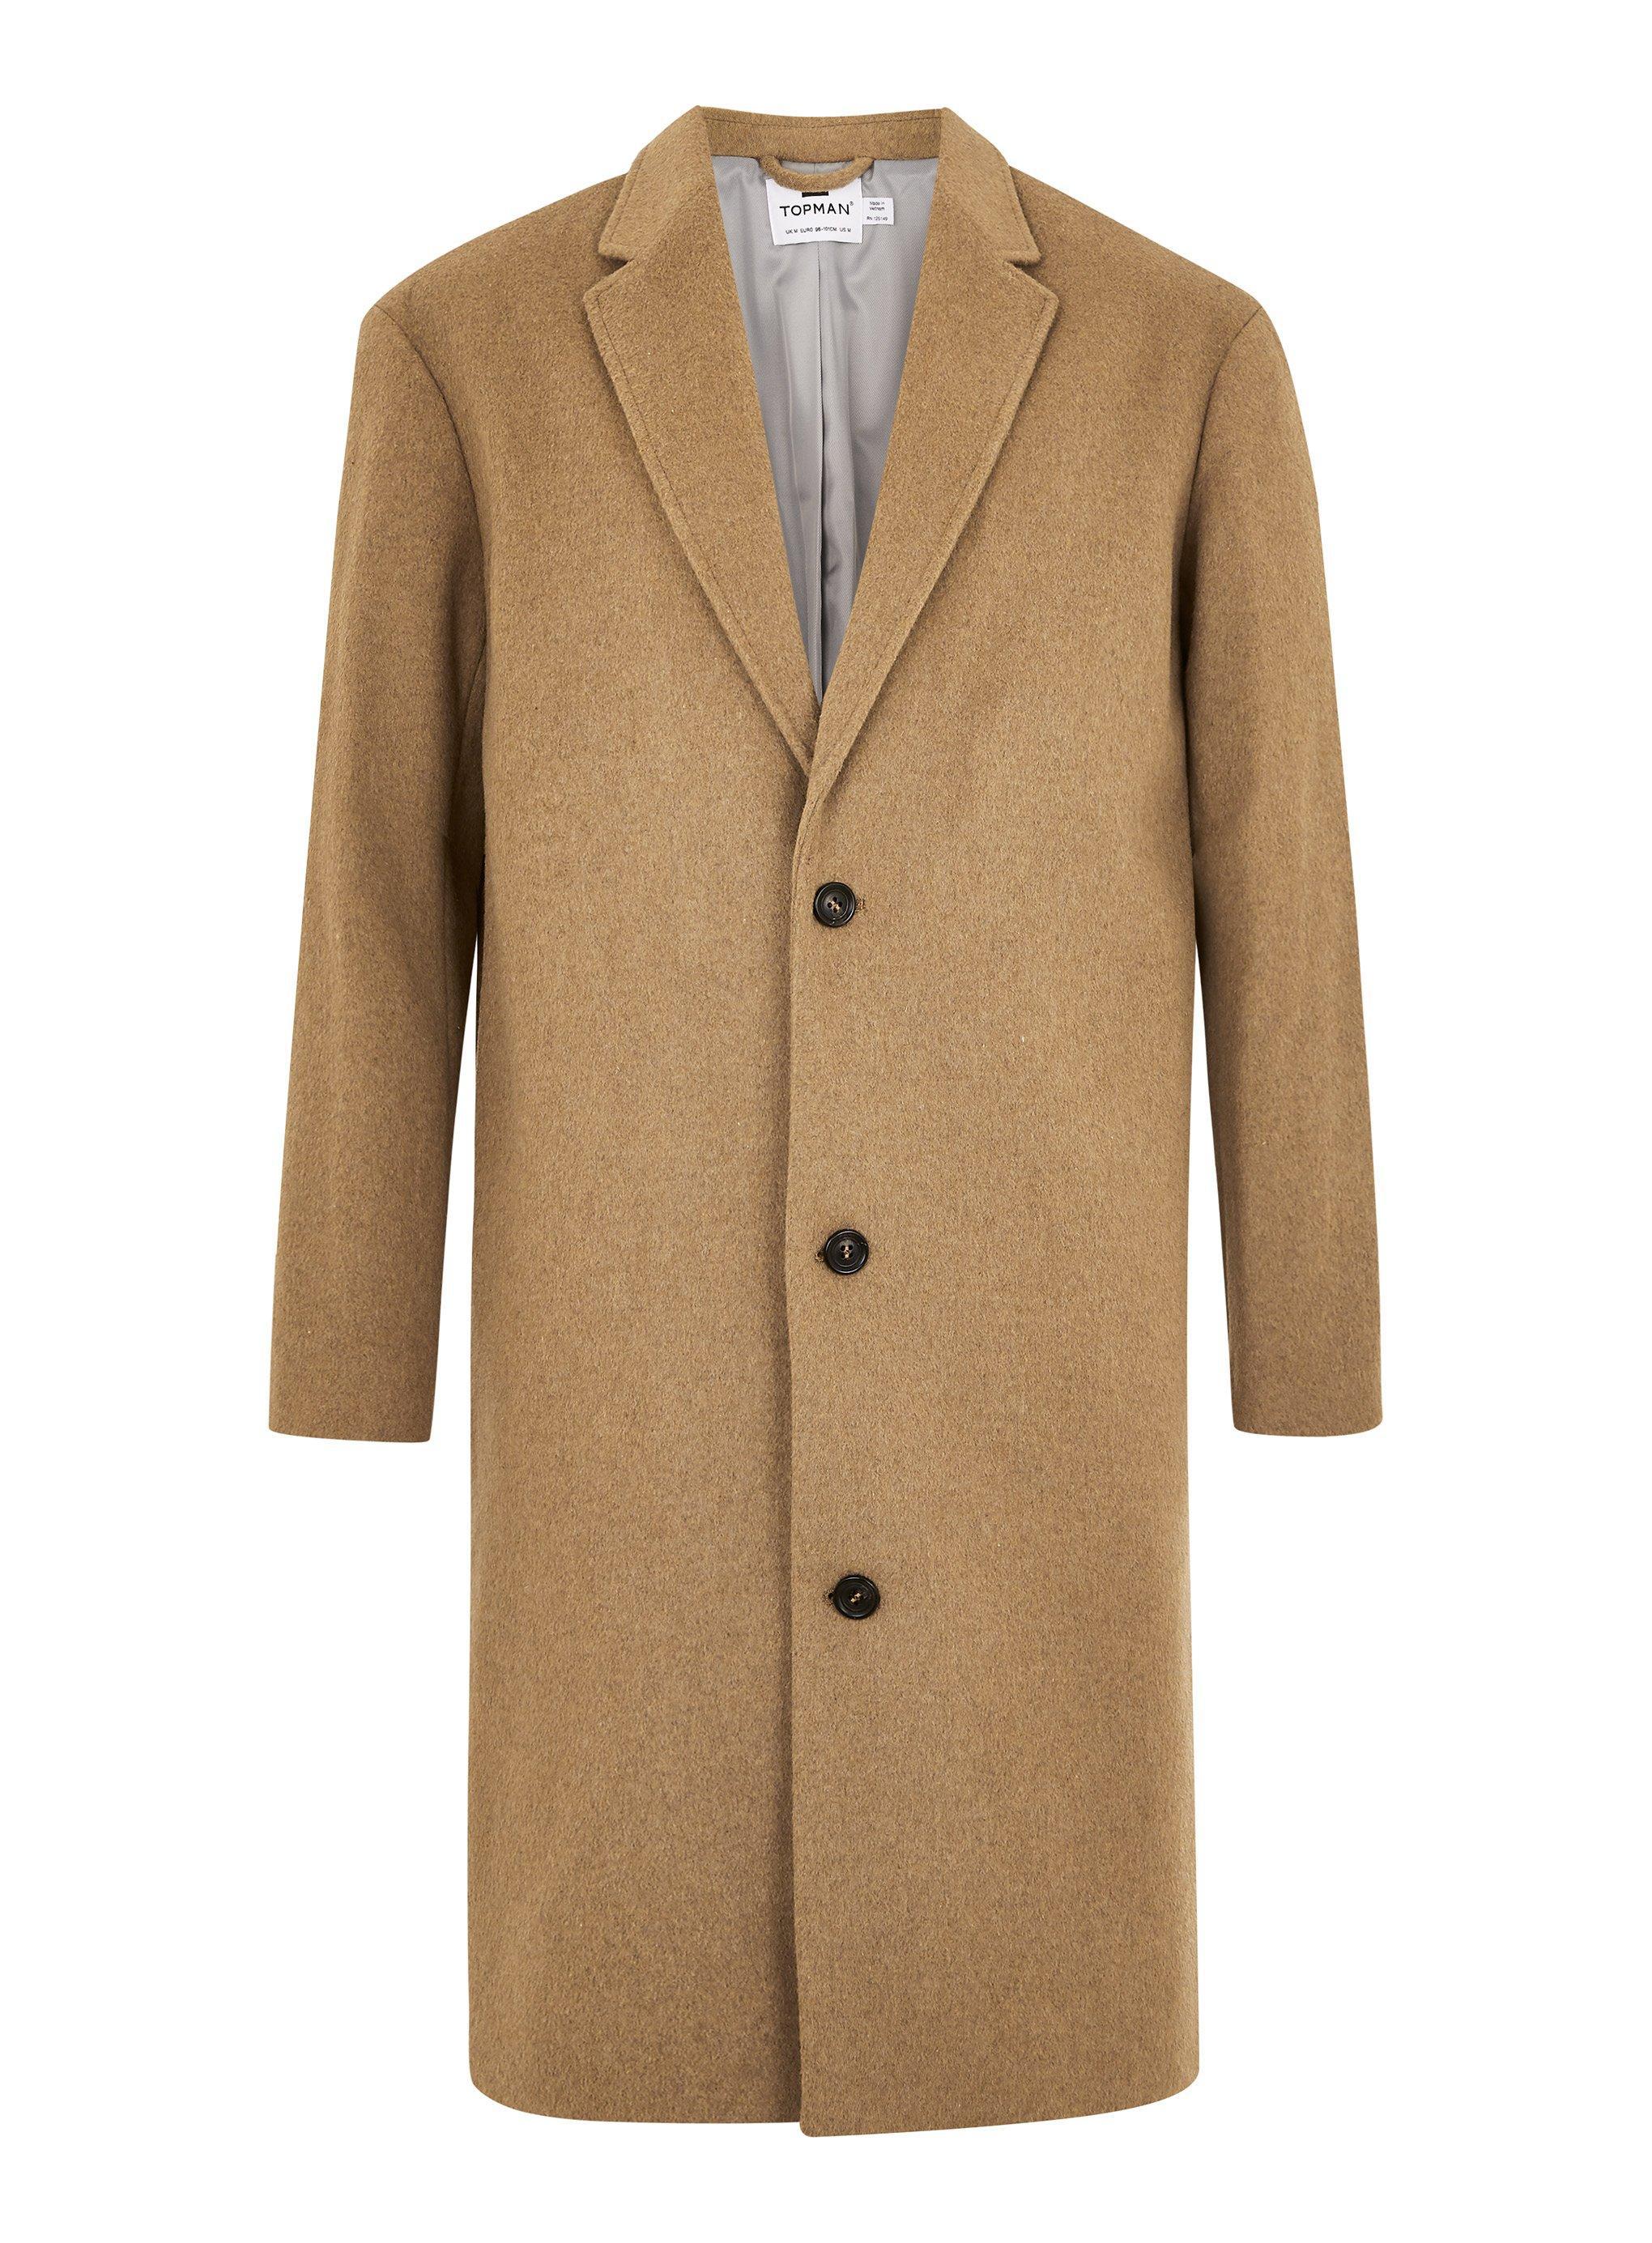 TOPMAN Synthetic Camel Oversized Overcoat in Brown for Men - Lyst